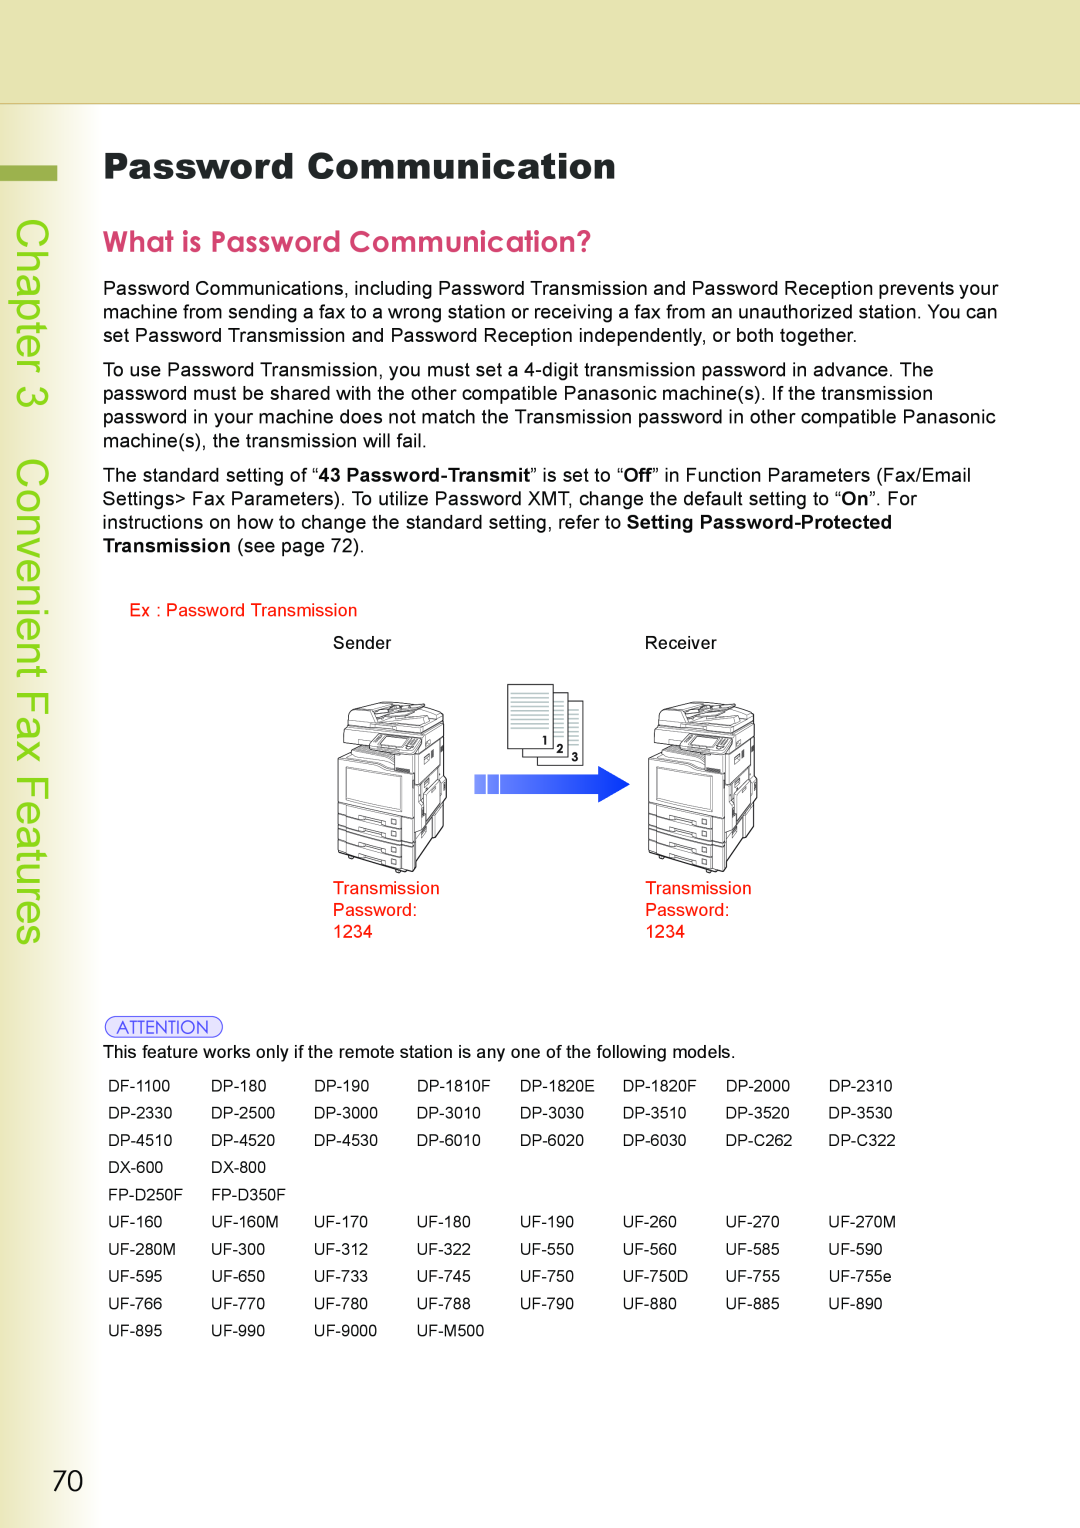 Philips DP-C262 manual What is Password Communication?, Convenient Fax Features 